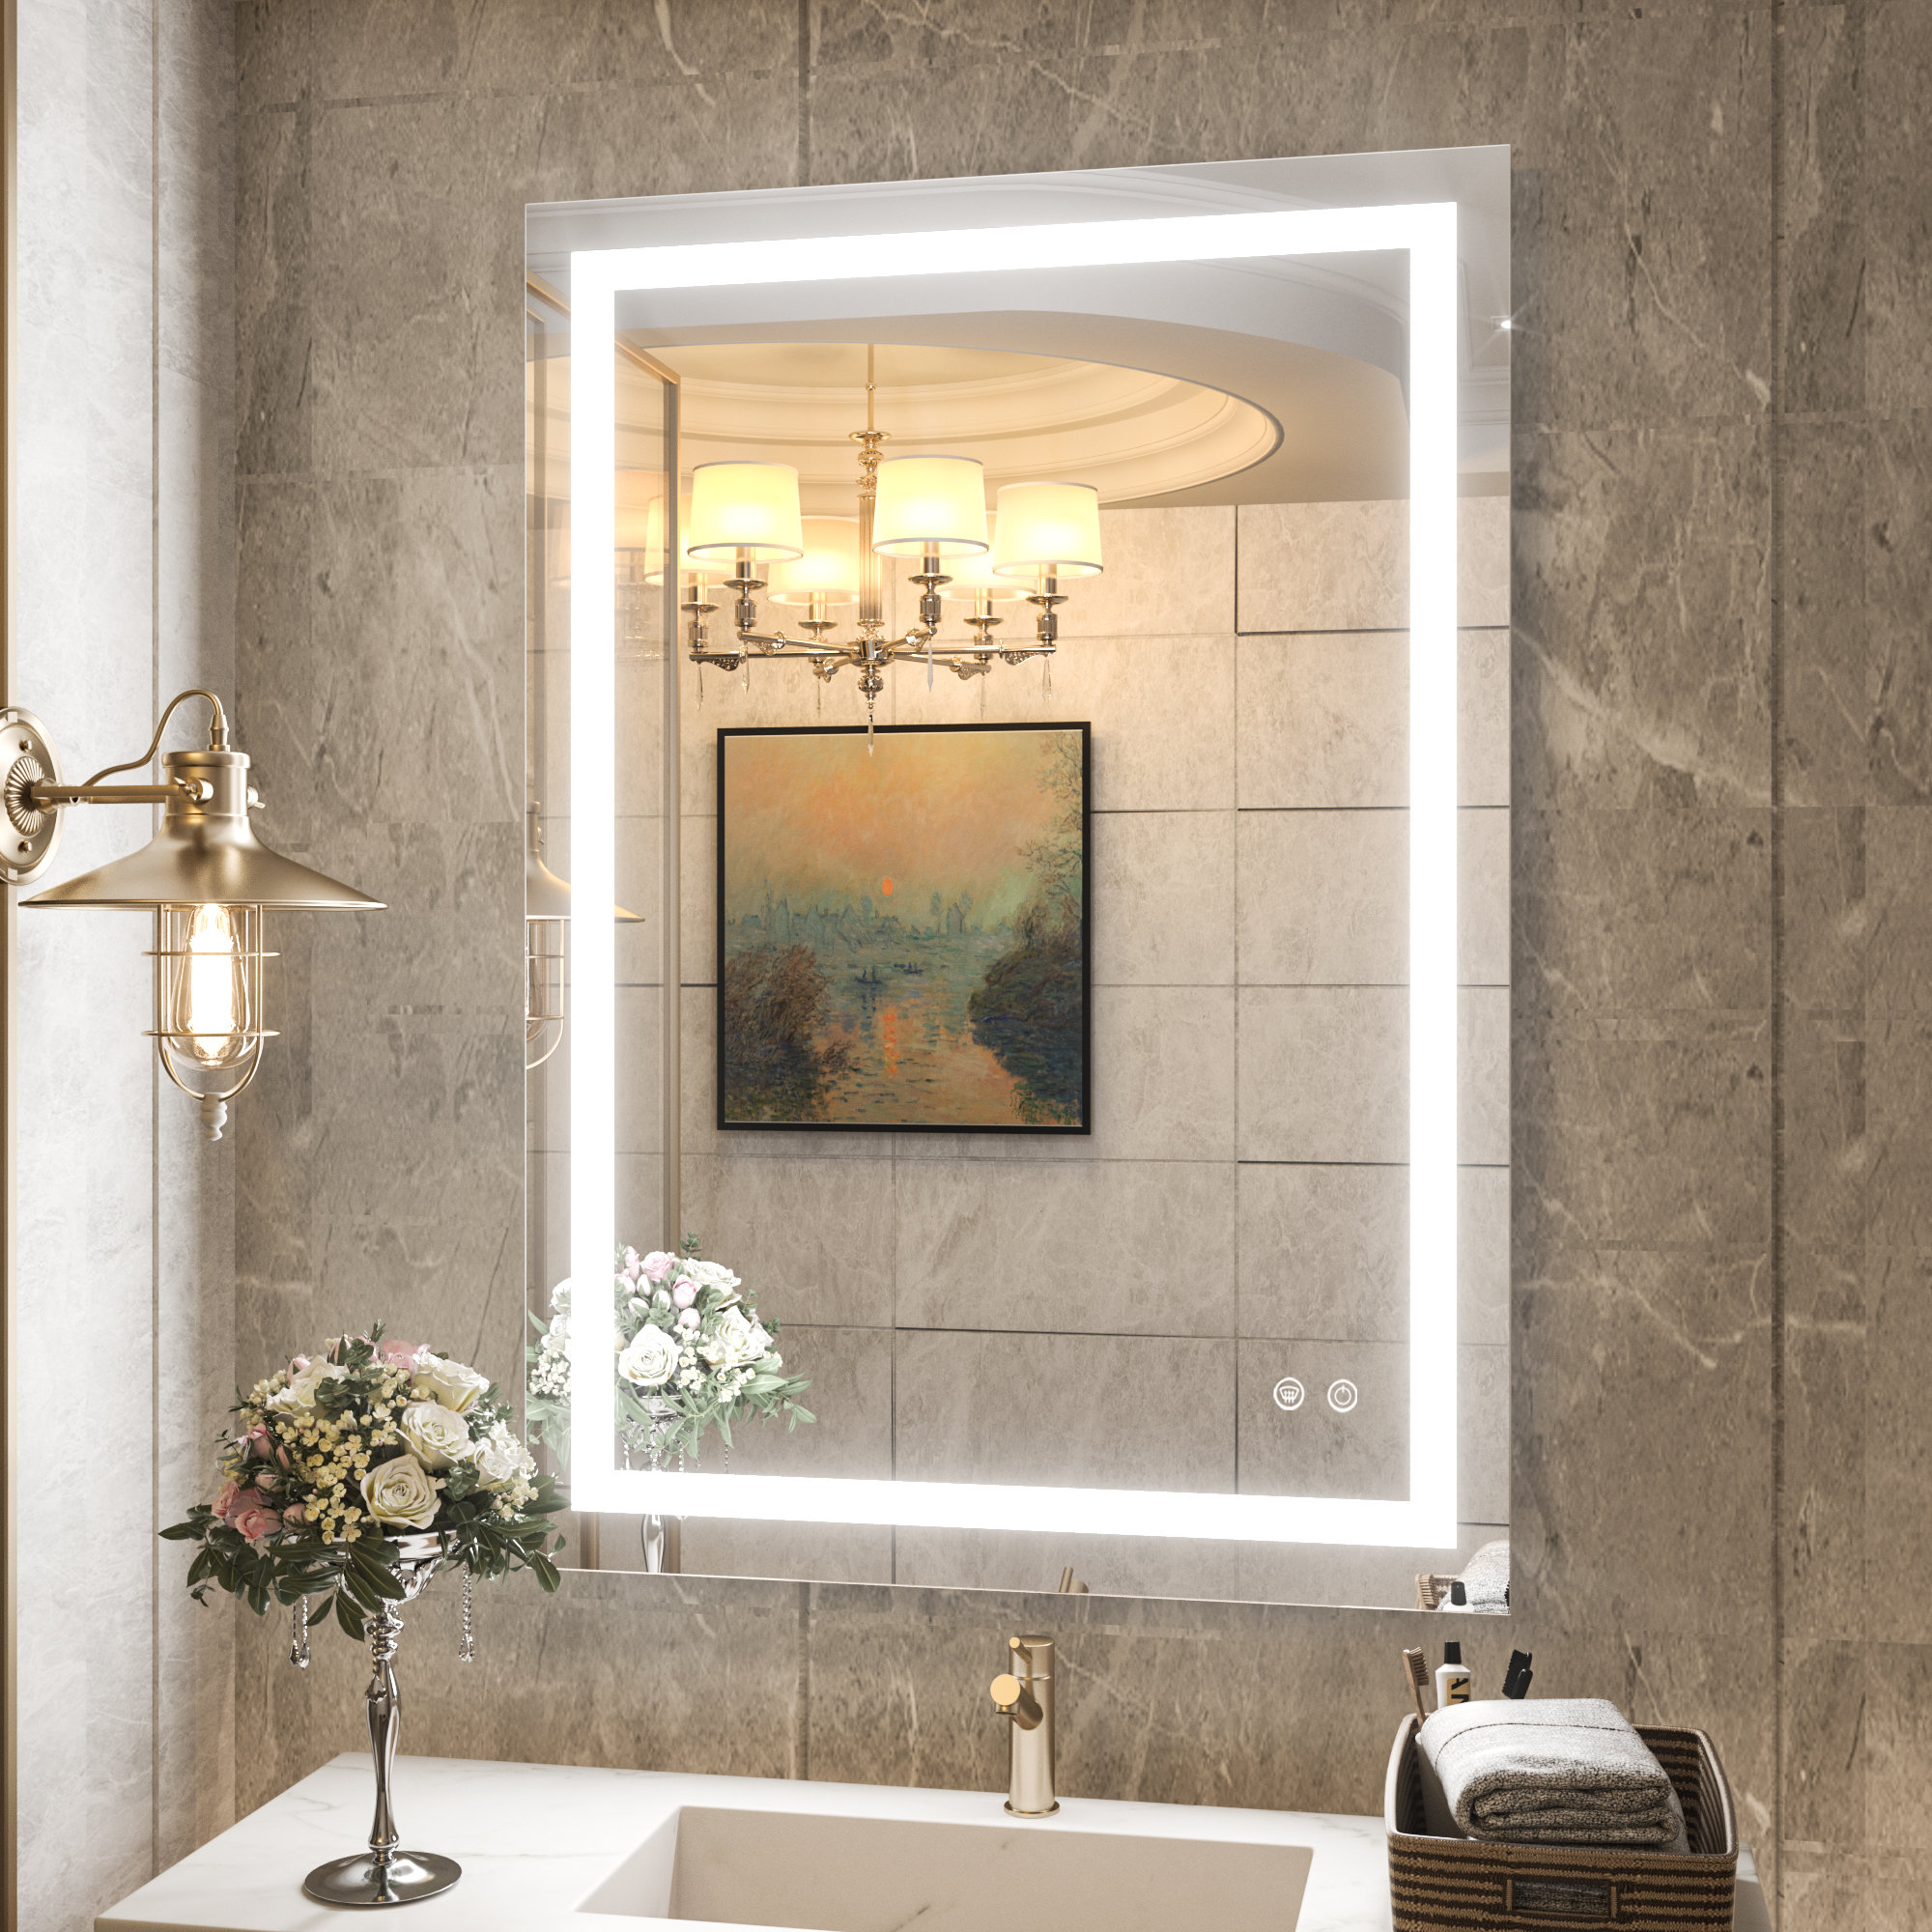 Orren Ellis Martrez Frameless LED Lighted Bathroom Vanity Mirror with  Brightness Adjustable, Memory Function, Anti-fog  Reviews Wayfair